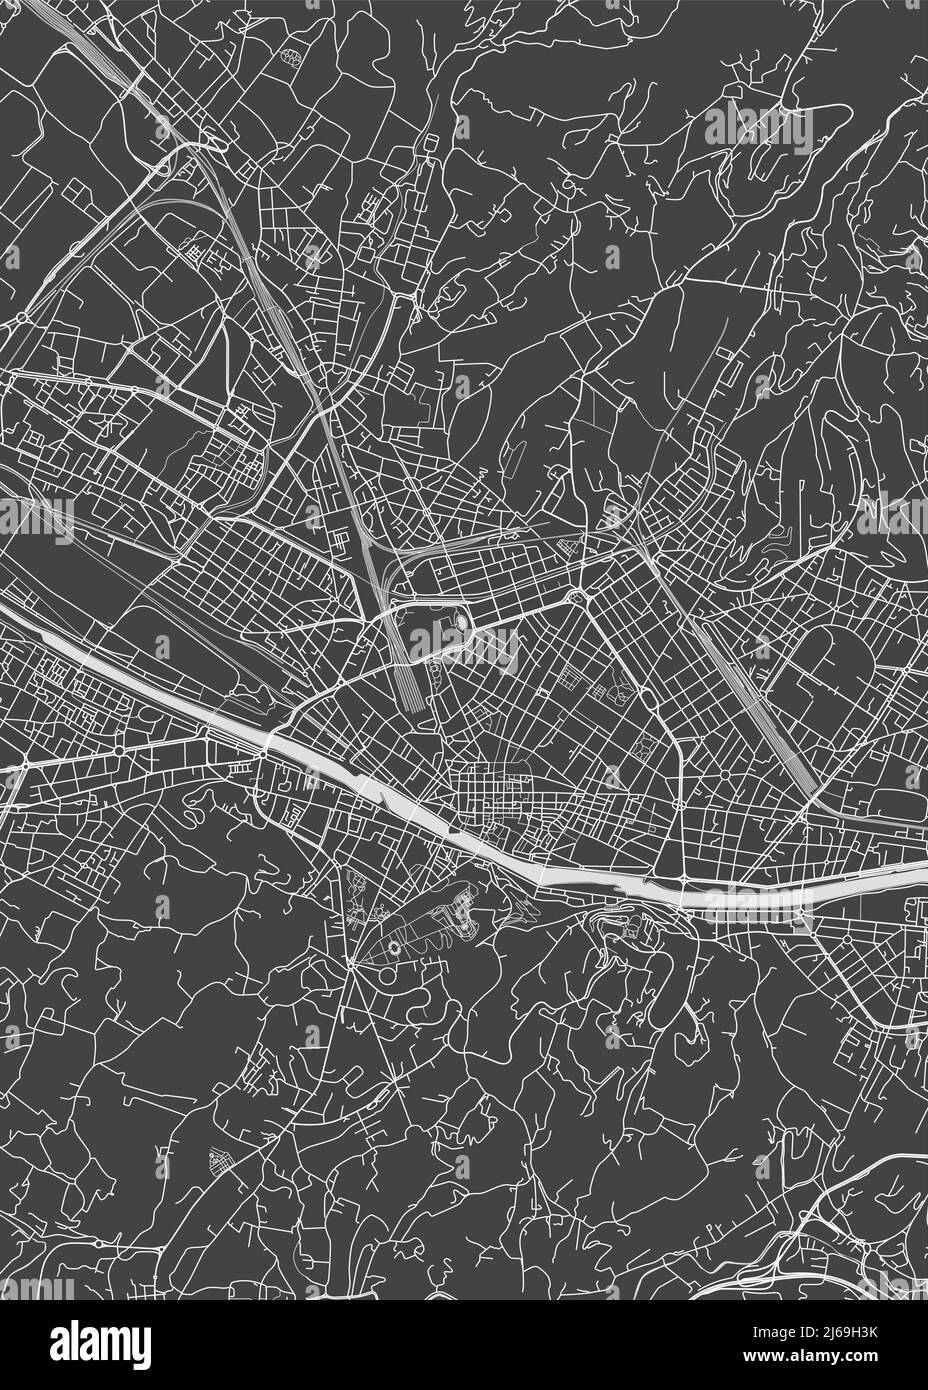 Stadtplan Florenz, monochromer Detailplan, Vektorgrafik Schwarzweiß-Stadtplan Stock Vektor